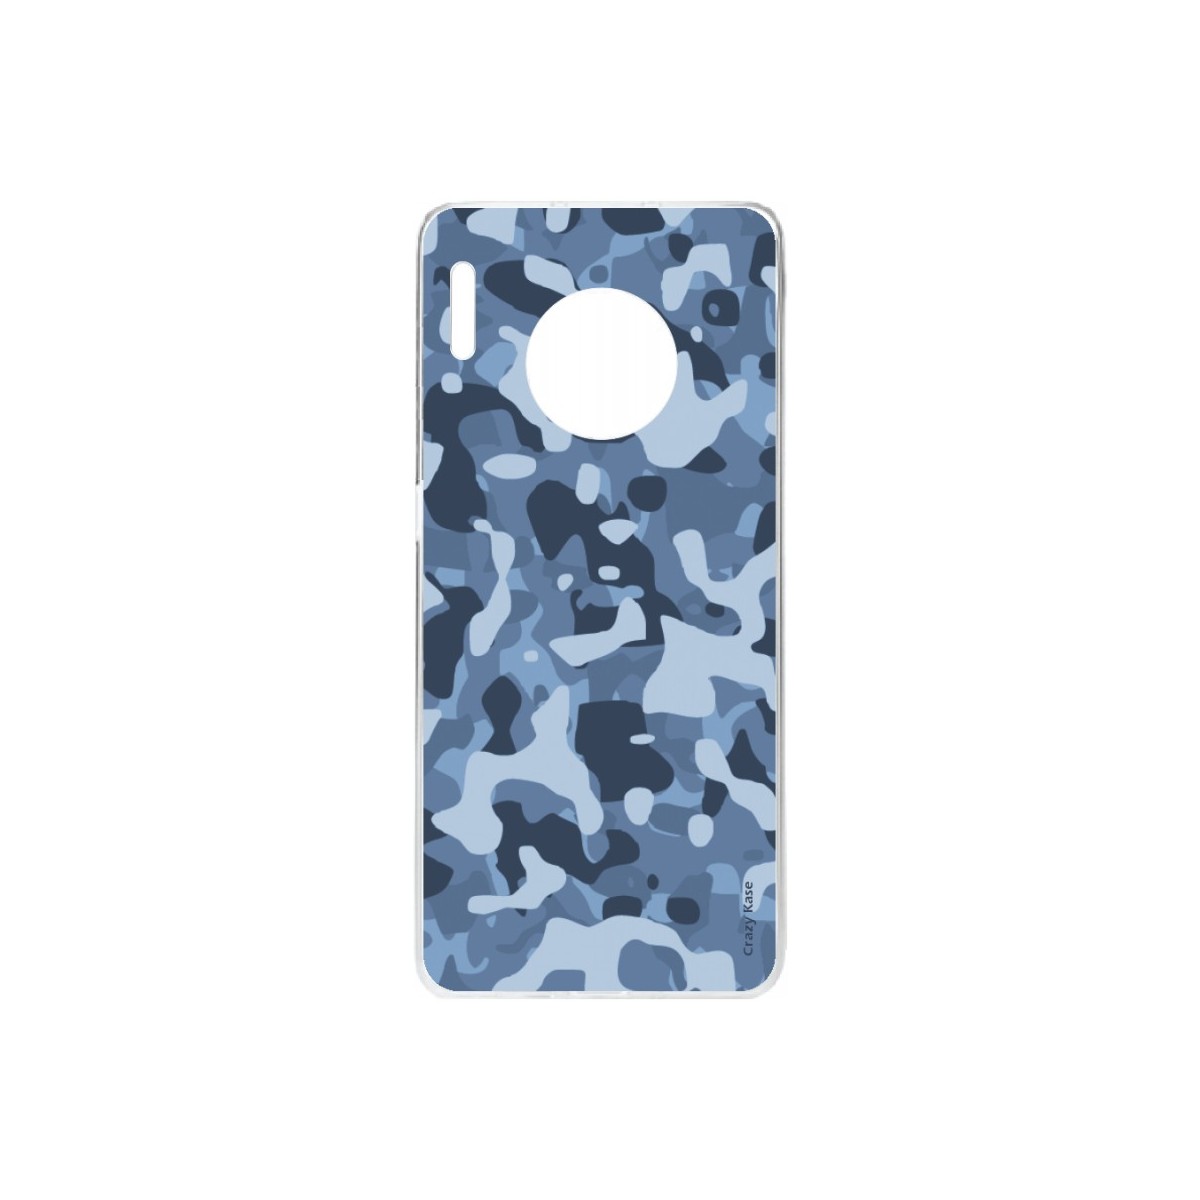 Coque Huawei Mate 30 Pro souple Camouflage militaire bleu Crazy Kase